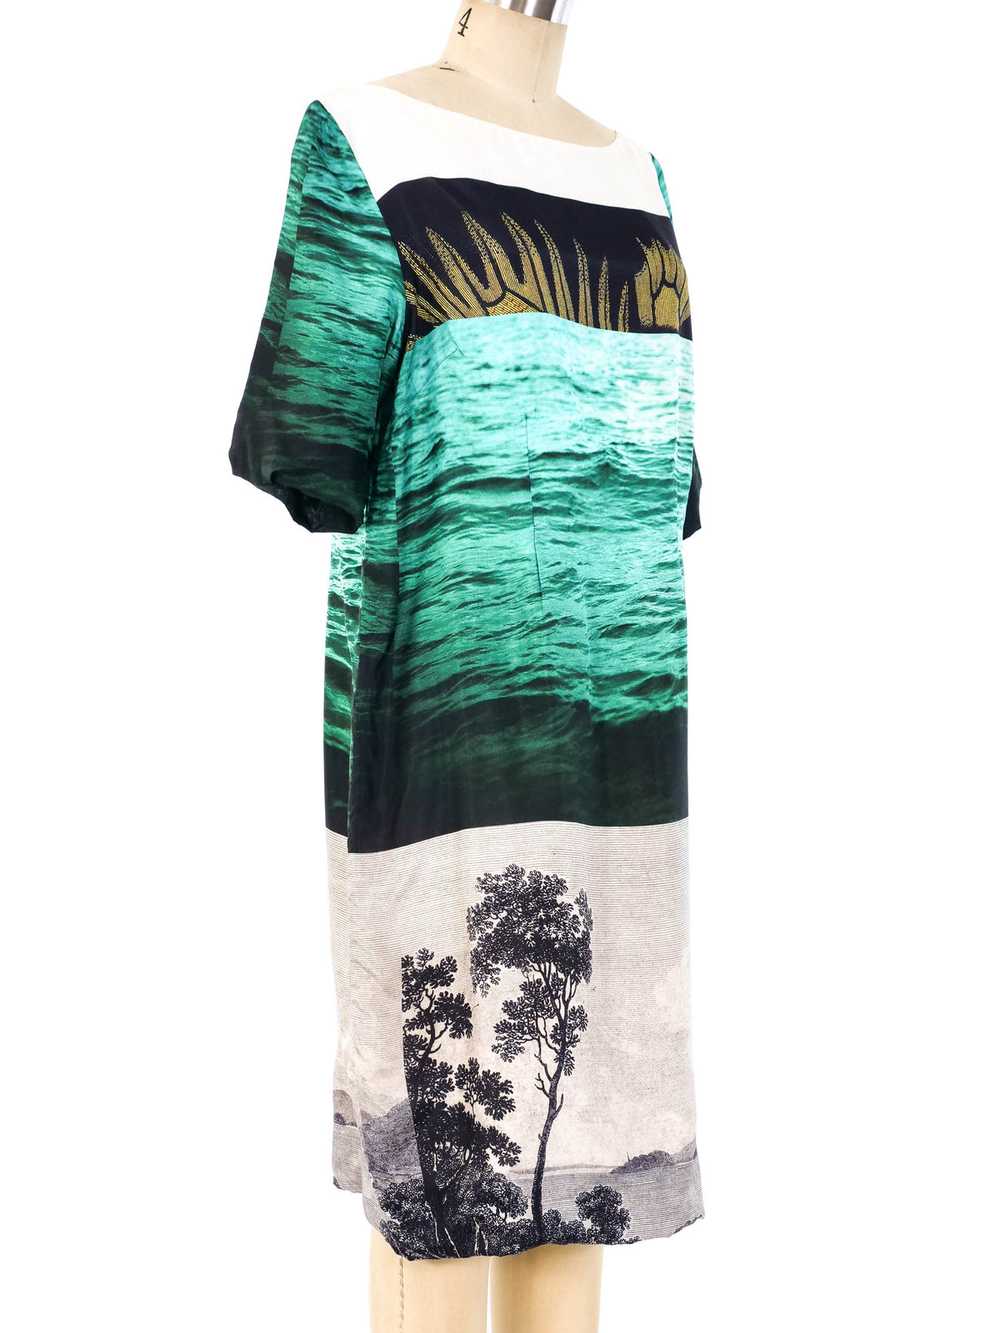 Dries Van Noten Water Motif Printed Shift Dress - image 2